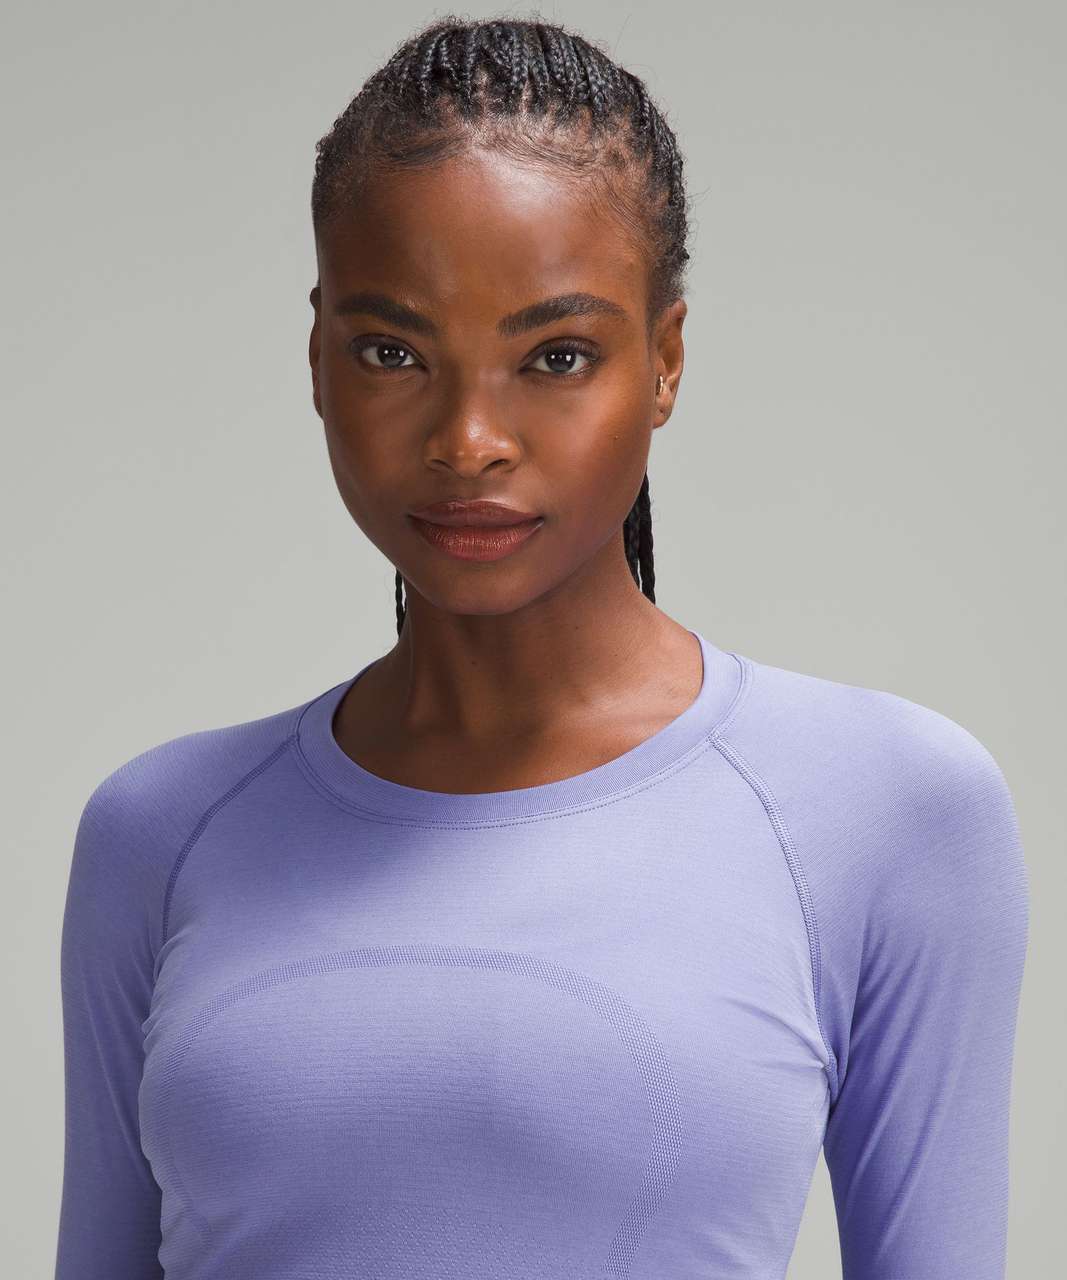 Lululemon Swiftly Tech Long-Sleeve Shirt 2.0 *Race Length - Dark Lavender / Dark Lavender